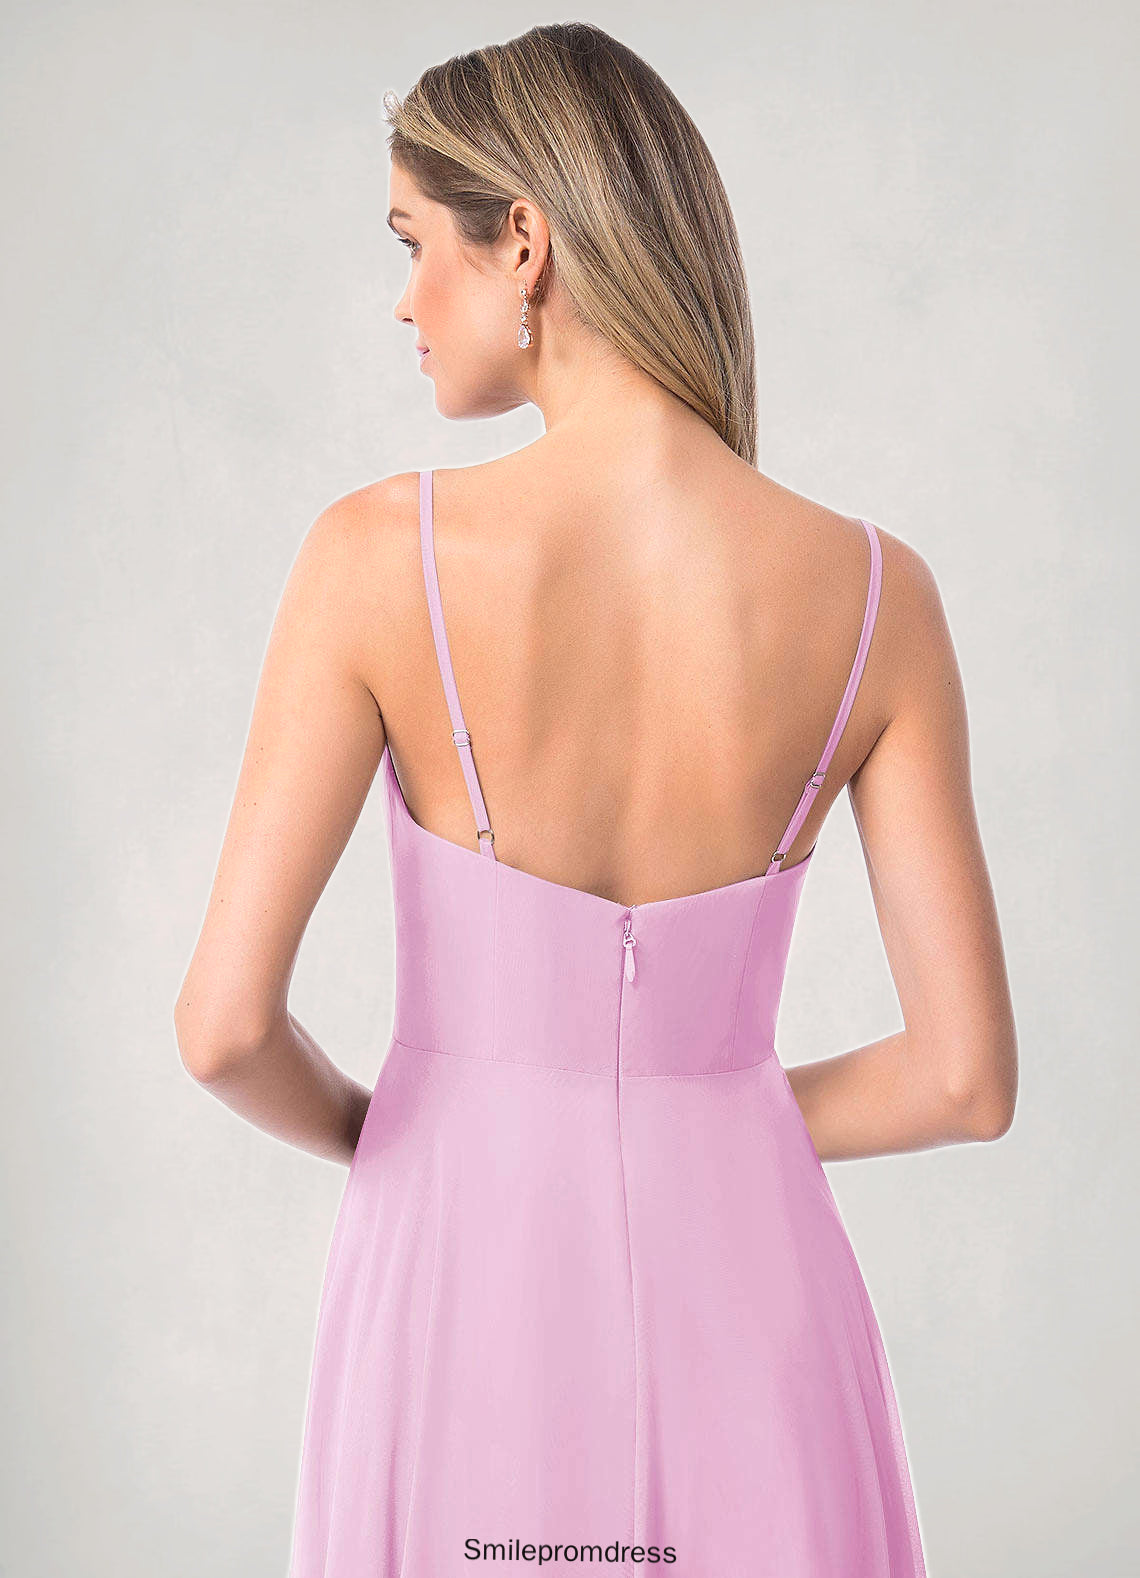 Neveah A-Line Lace Chiffon Floor-Length Dress P0019718